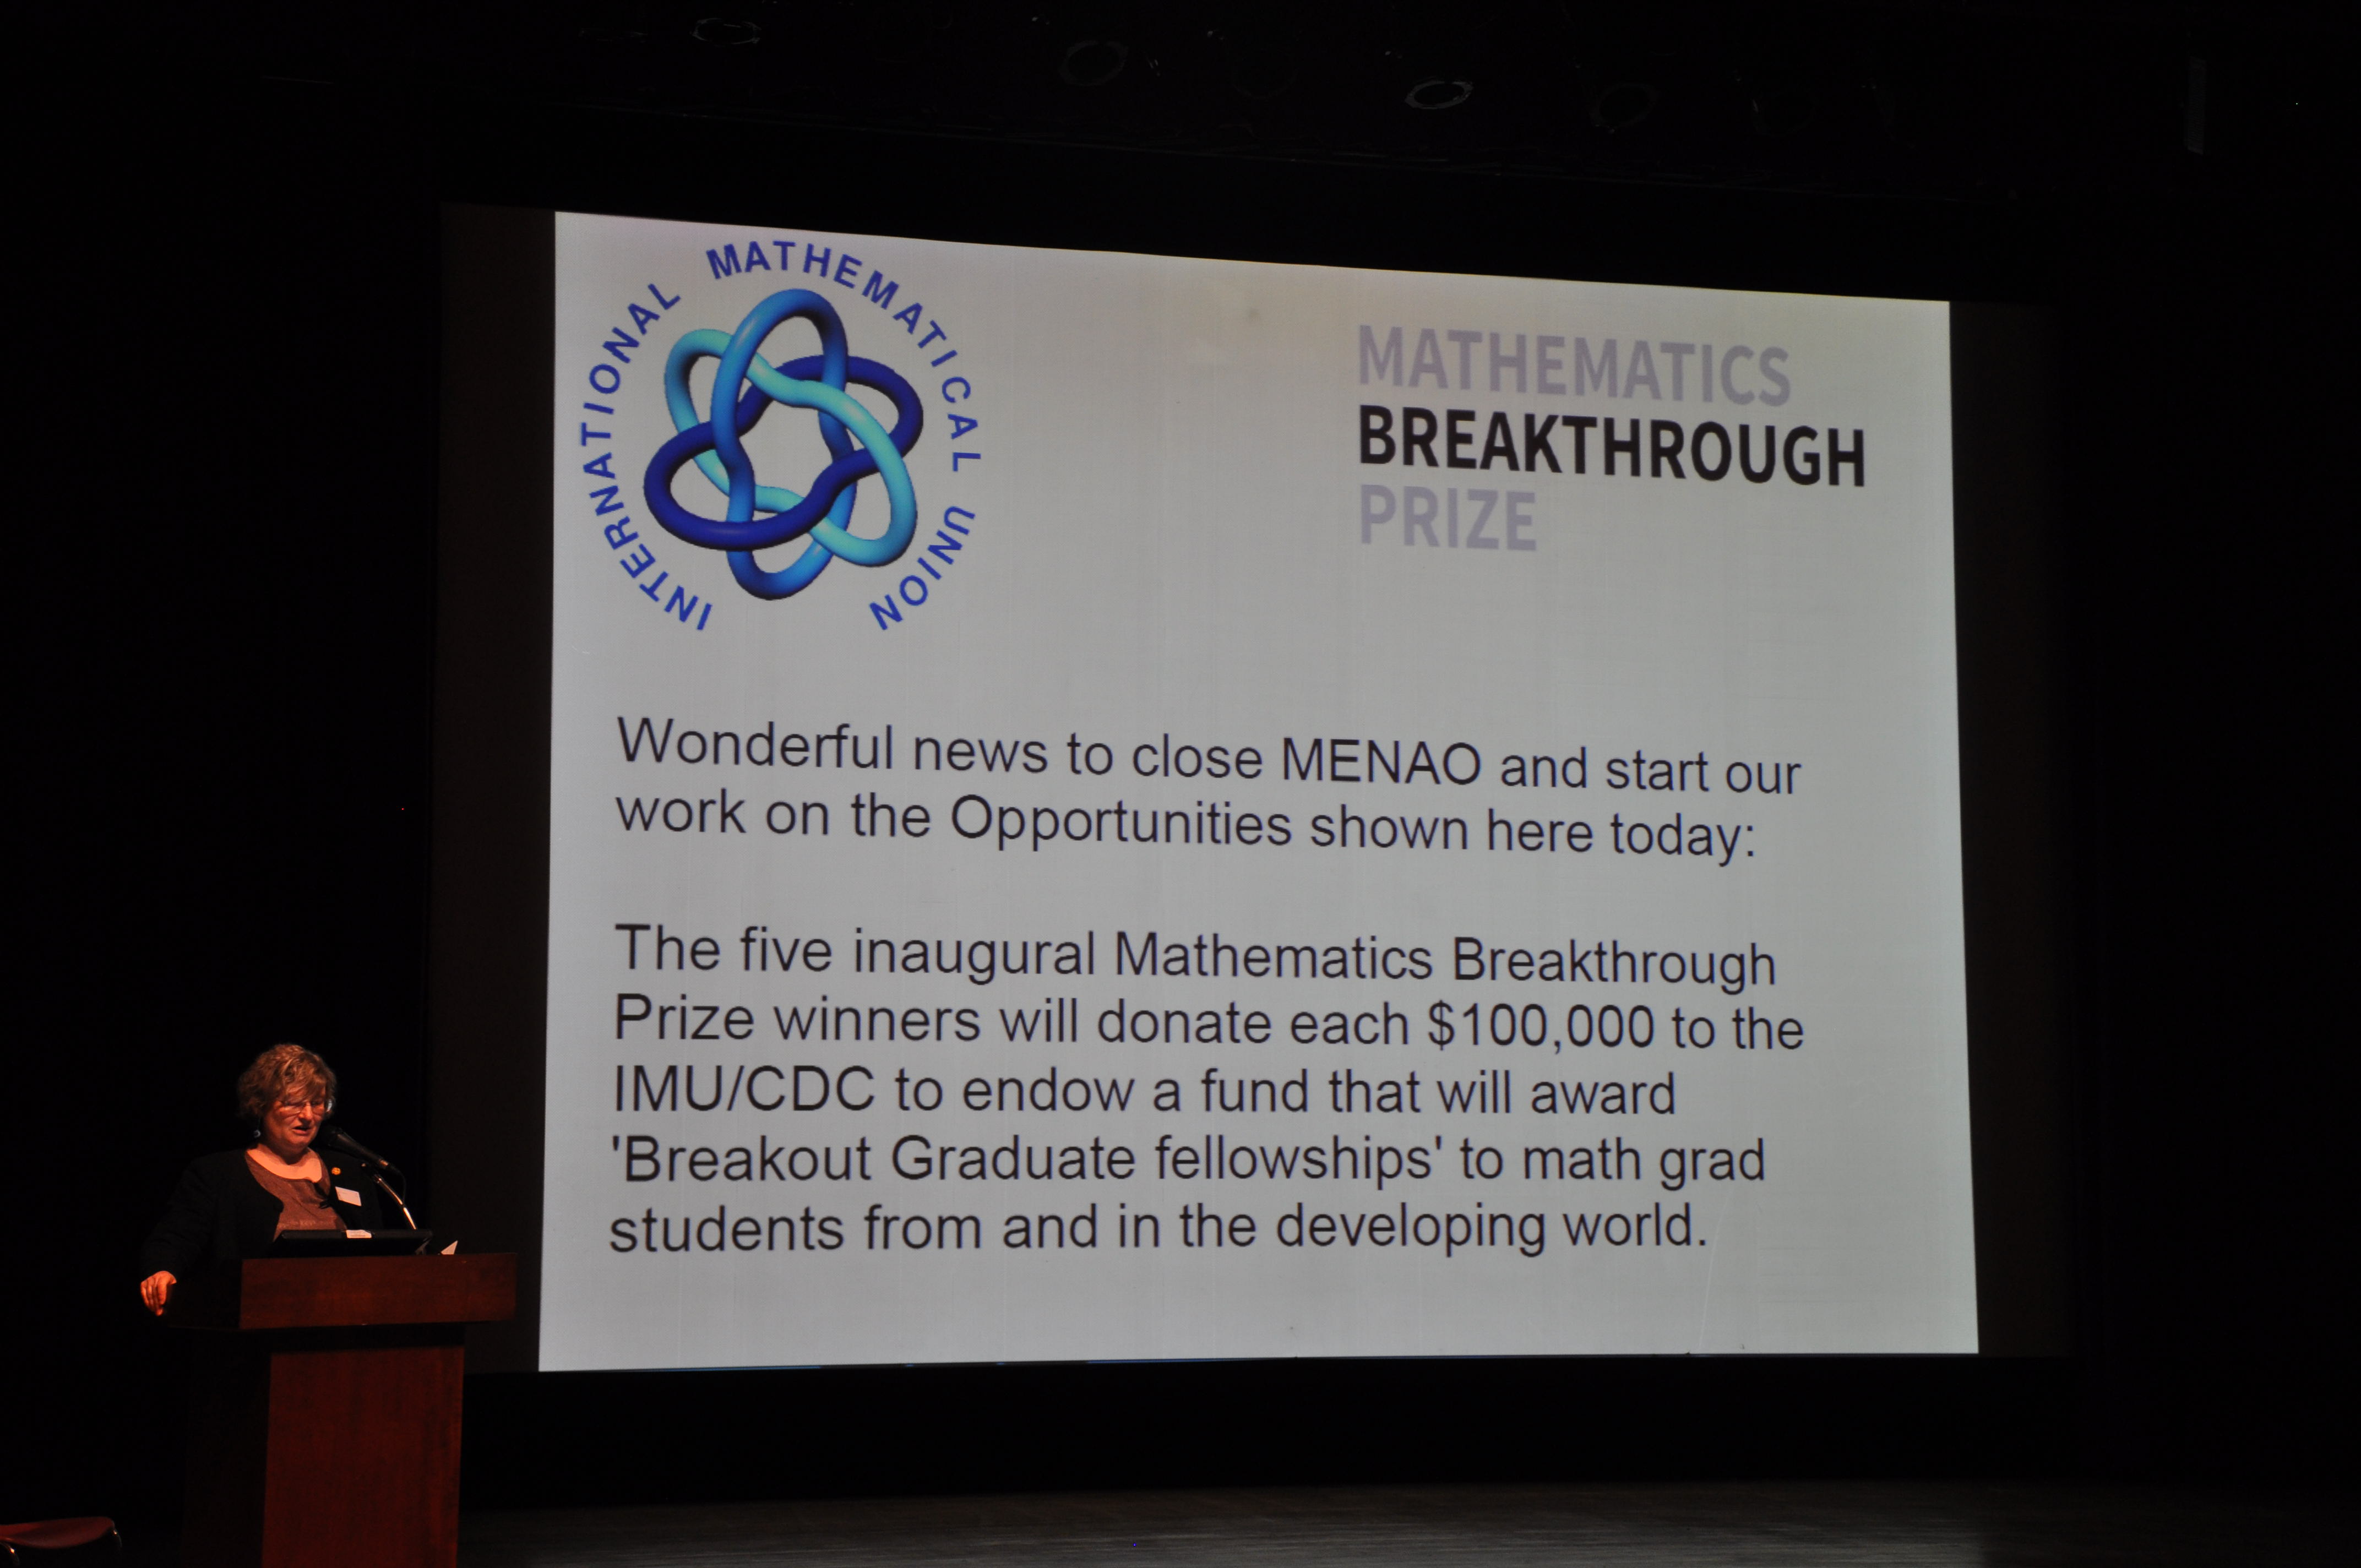 Breakthrough_prize.jpg